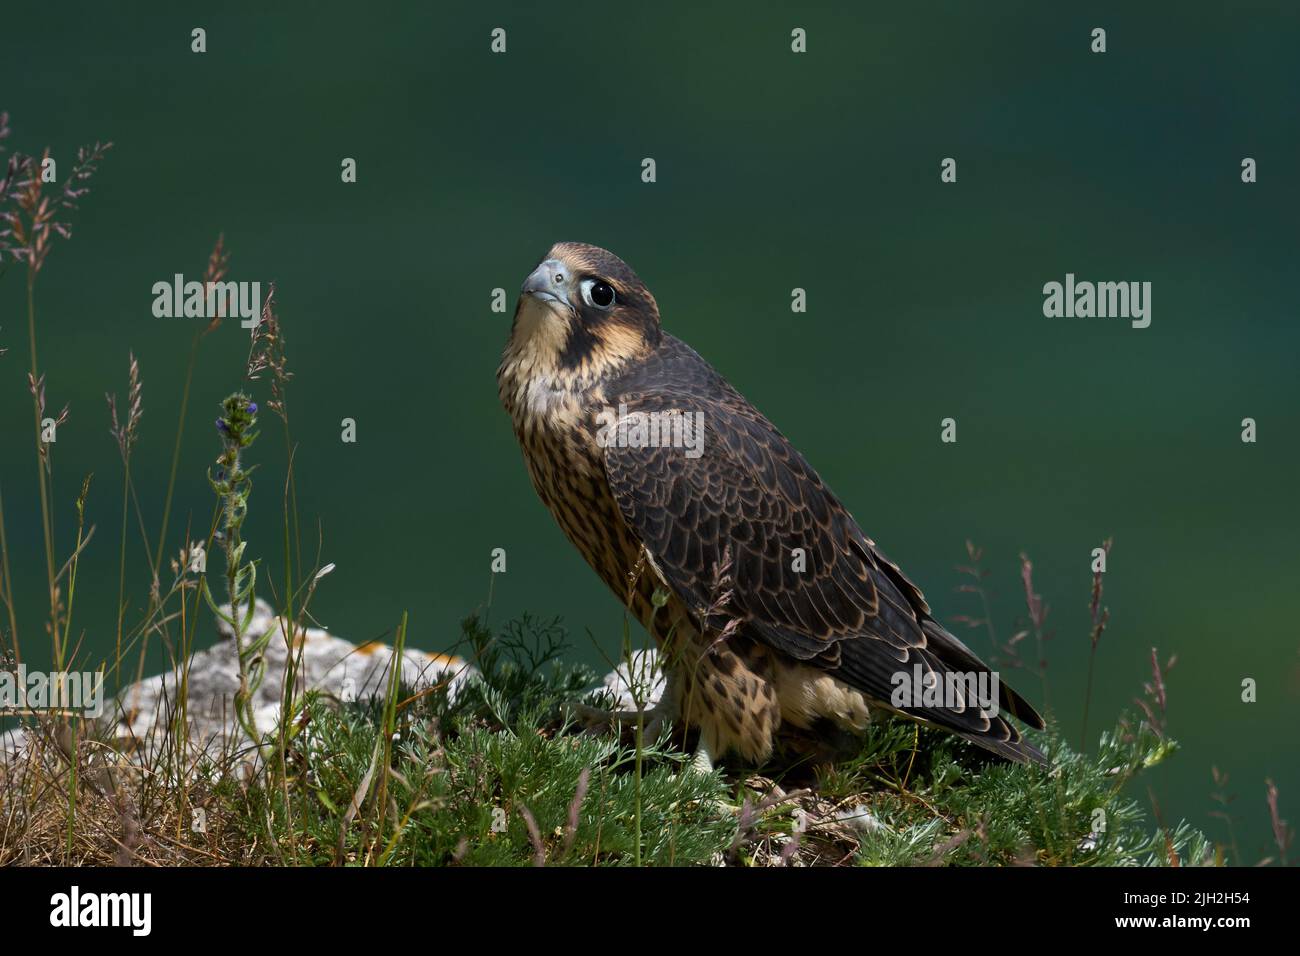 Peregrine falcon (Falco peregrinus) in its natural enviroment in Denmark Stock Photo